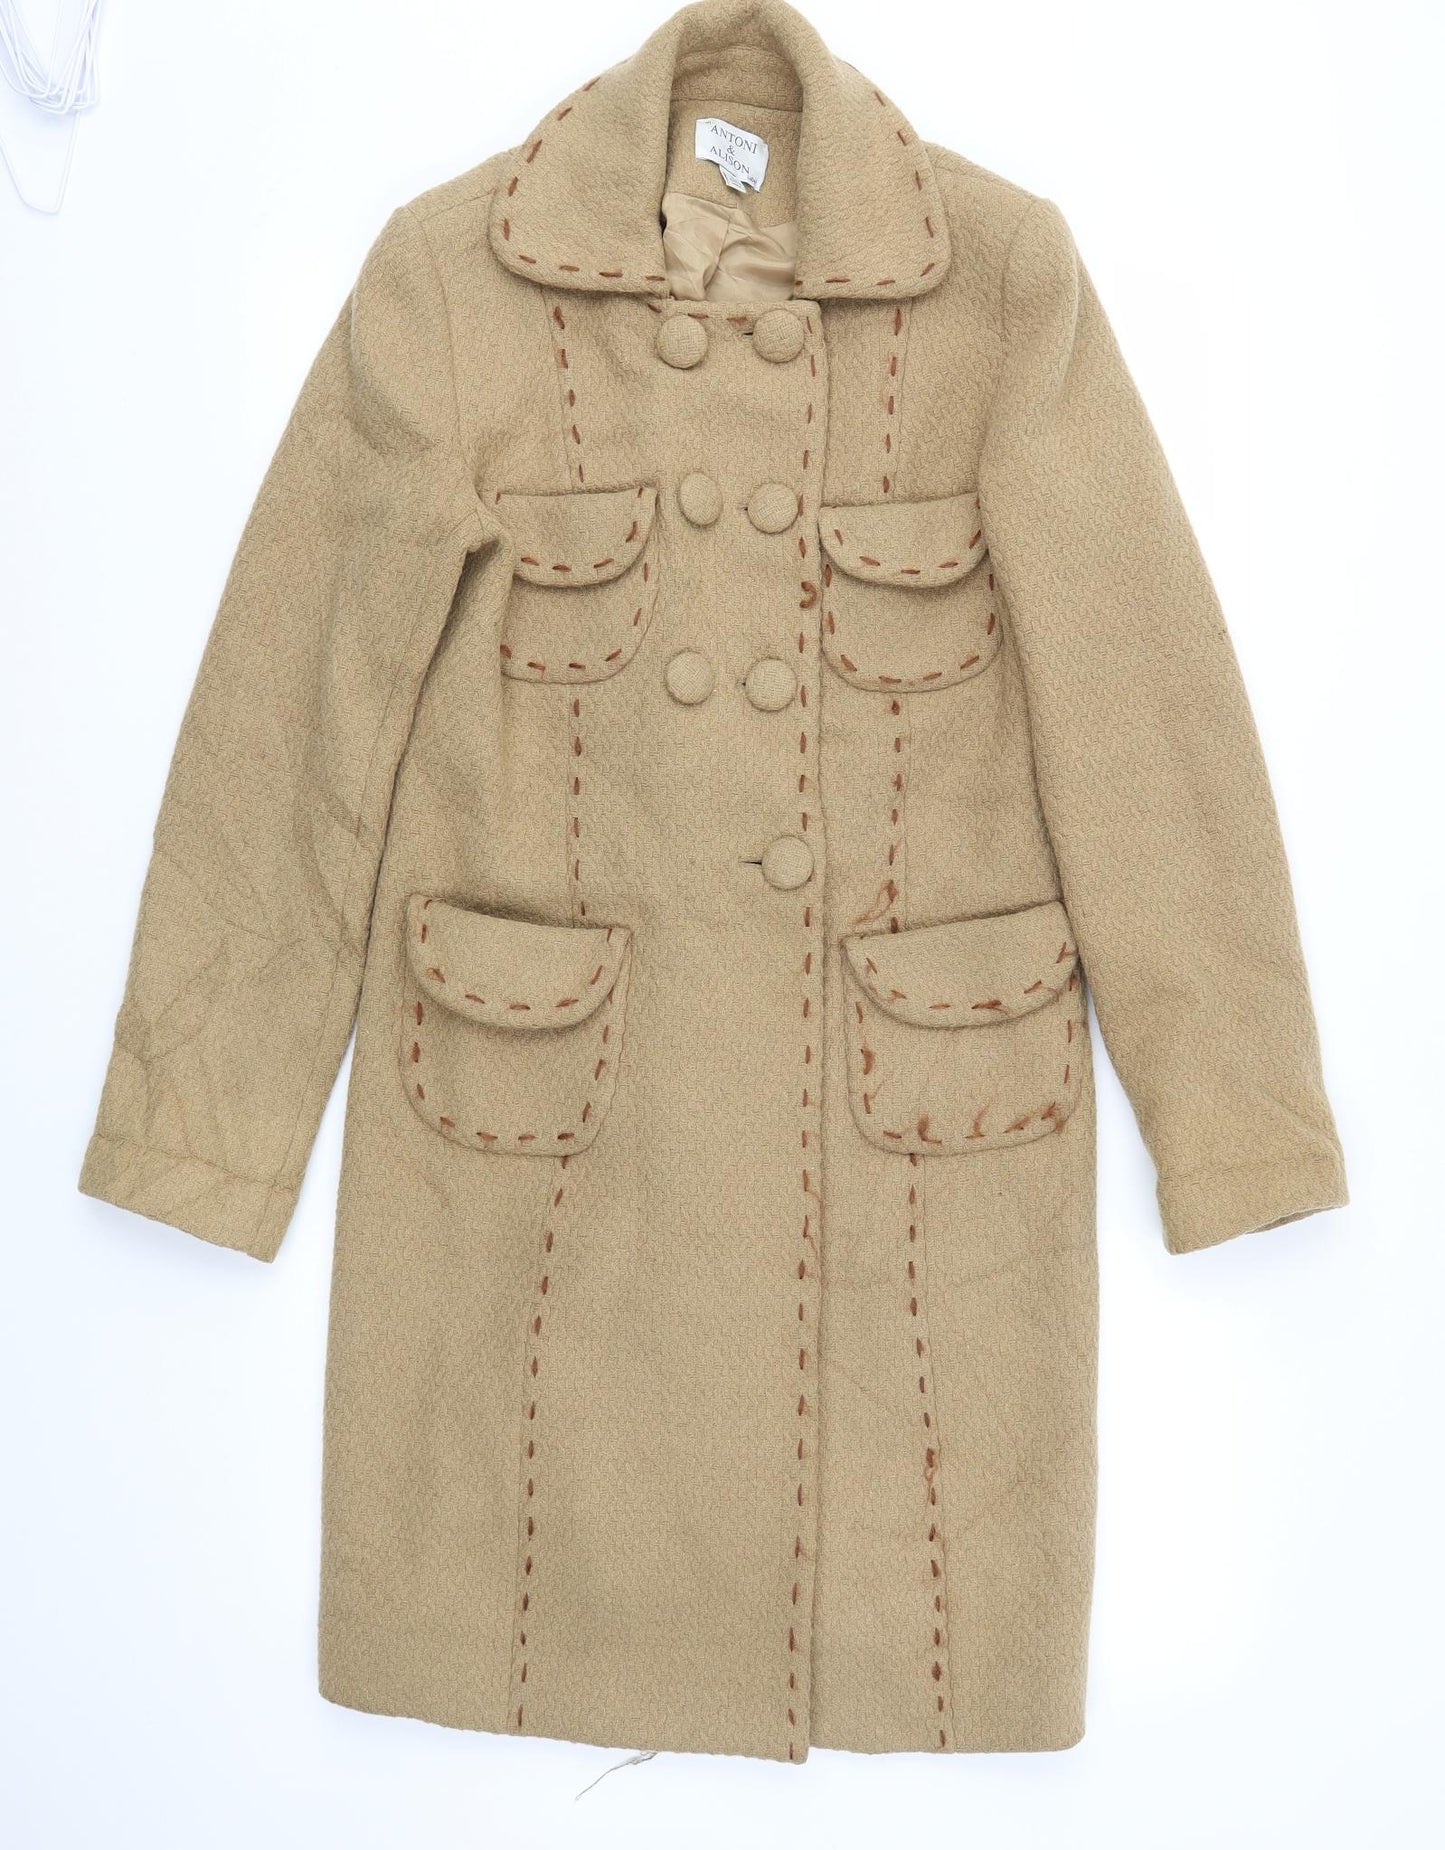 Antoni & Alison Womens Beige   Jacket Coat Size S